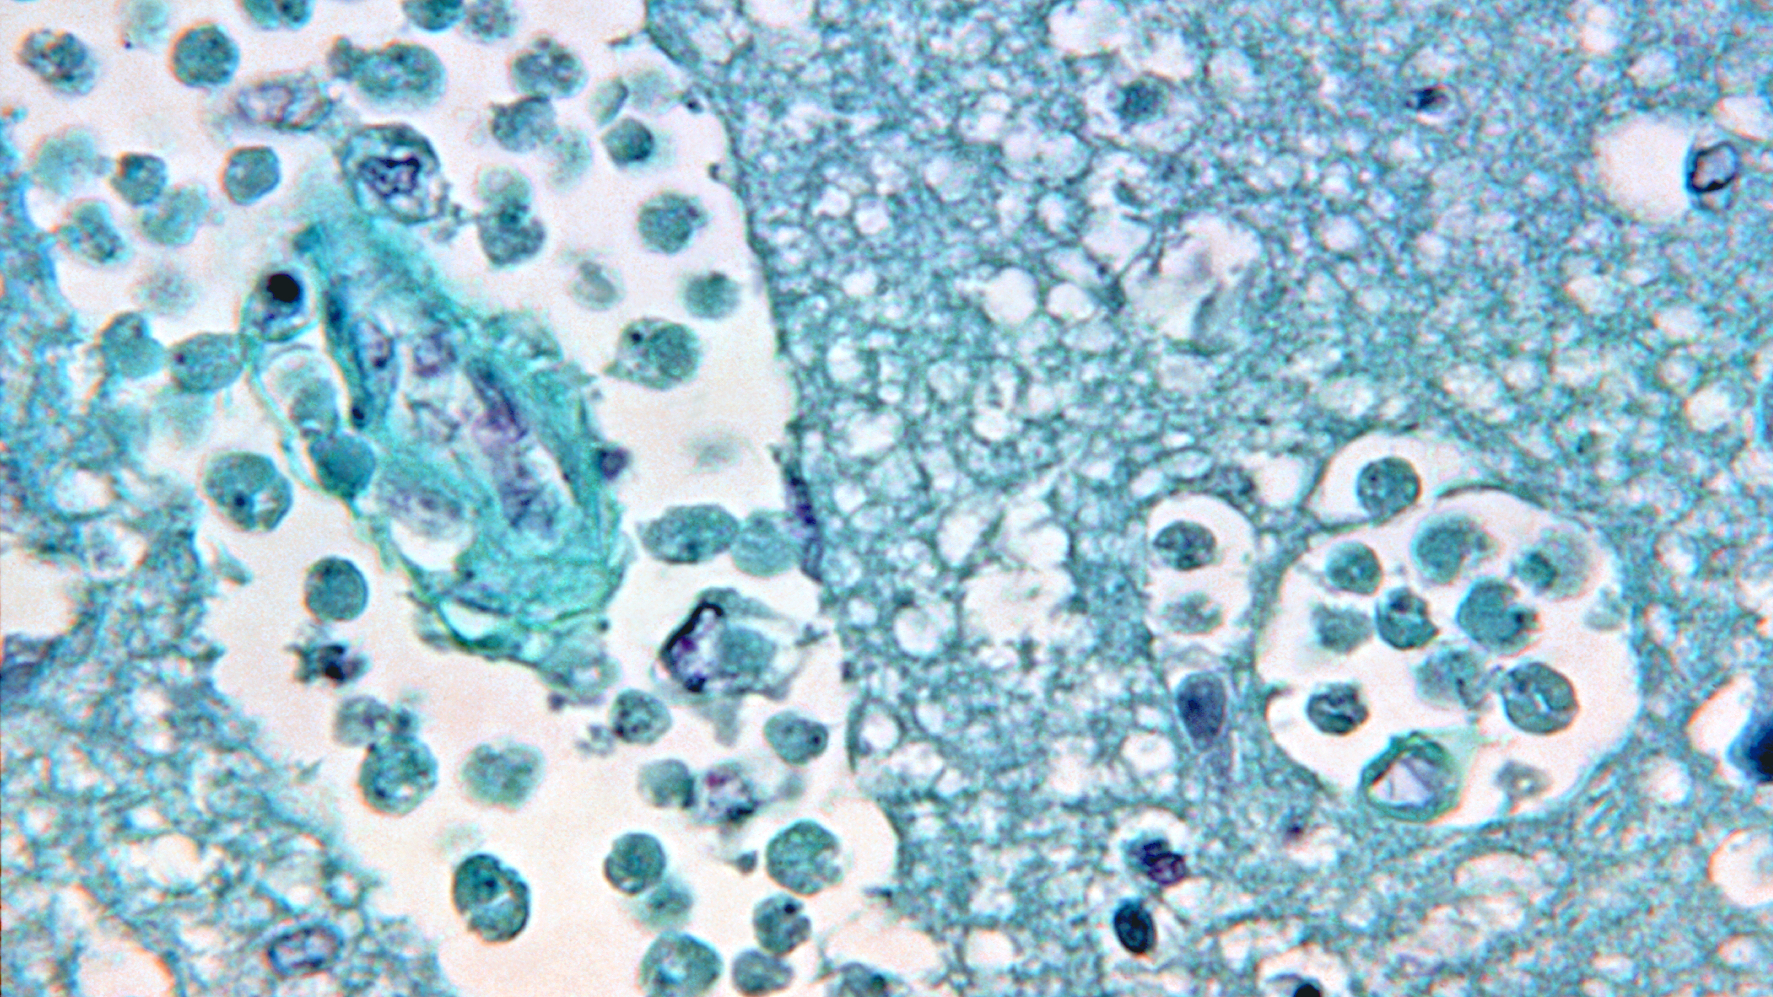 A photo of Naegleria fowleri, a parasite that’s often called the “brain eating” amoeba.